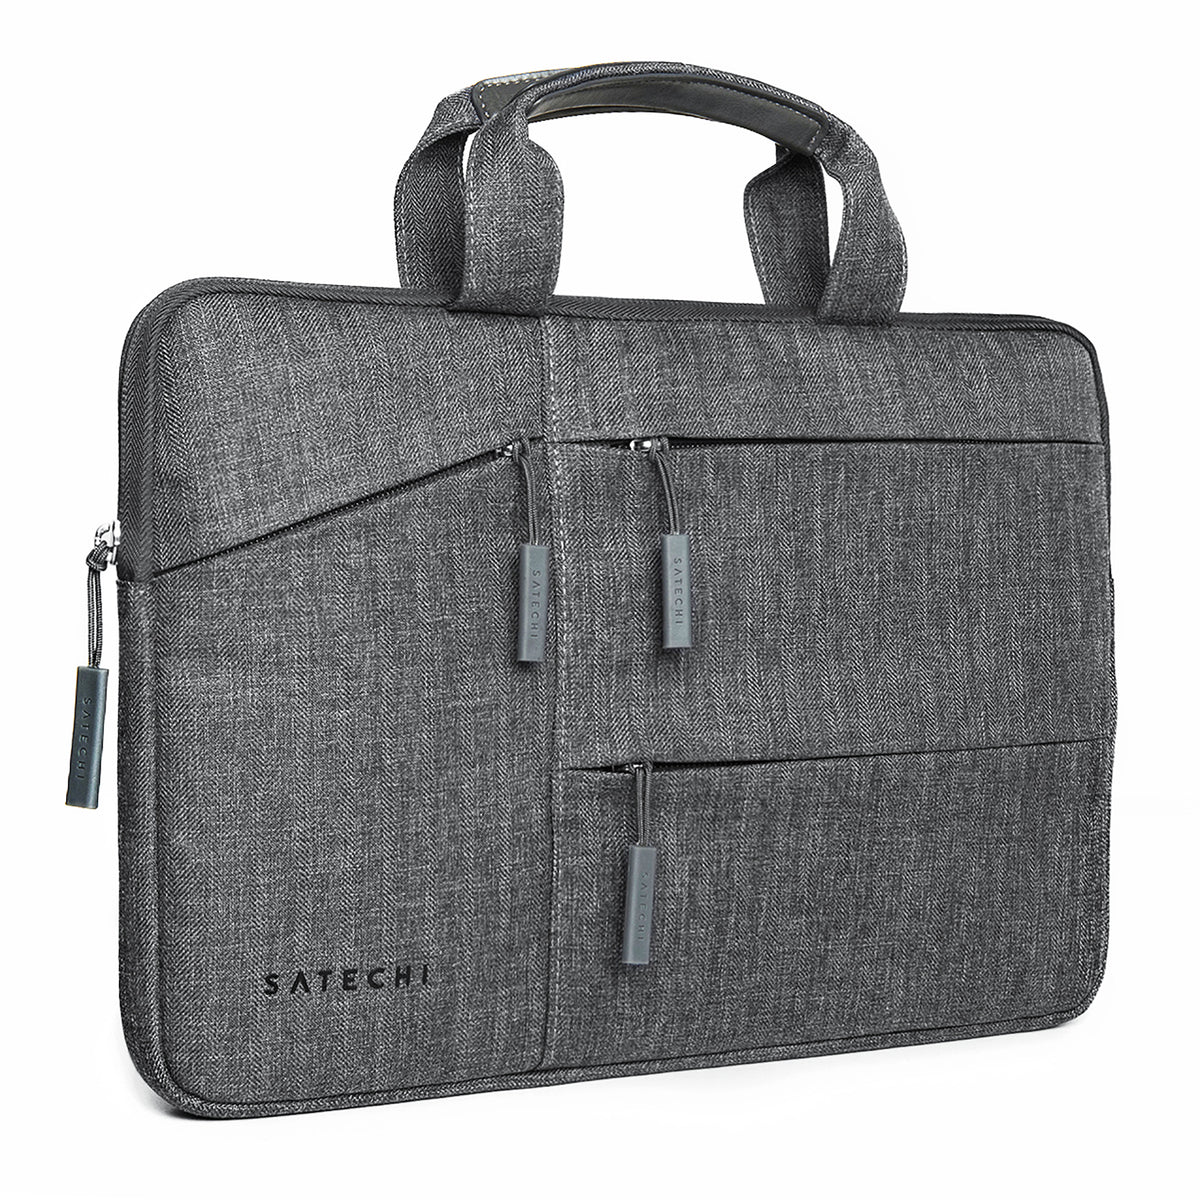 SATECHI Fabric Laptop Carrying Bag 15-inch - Gray